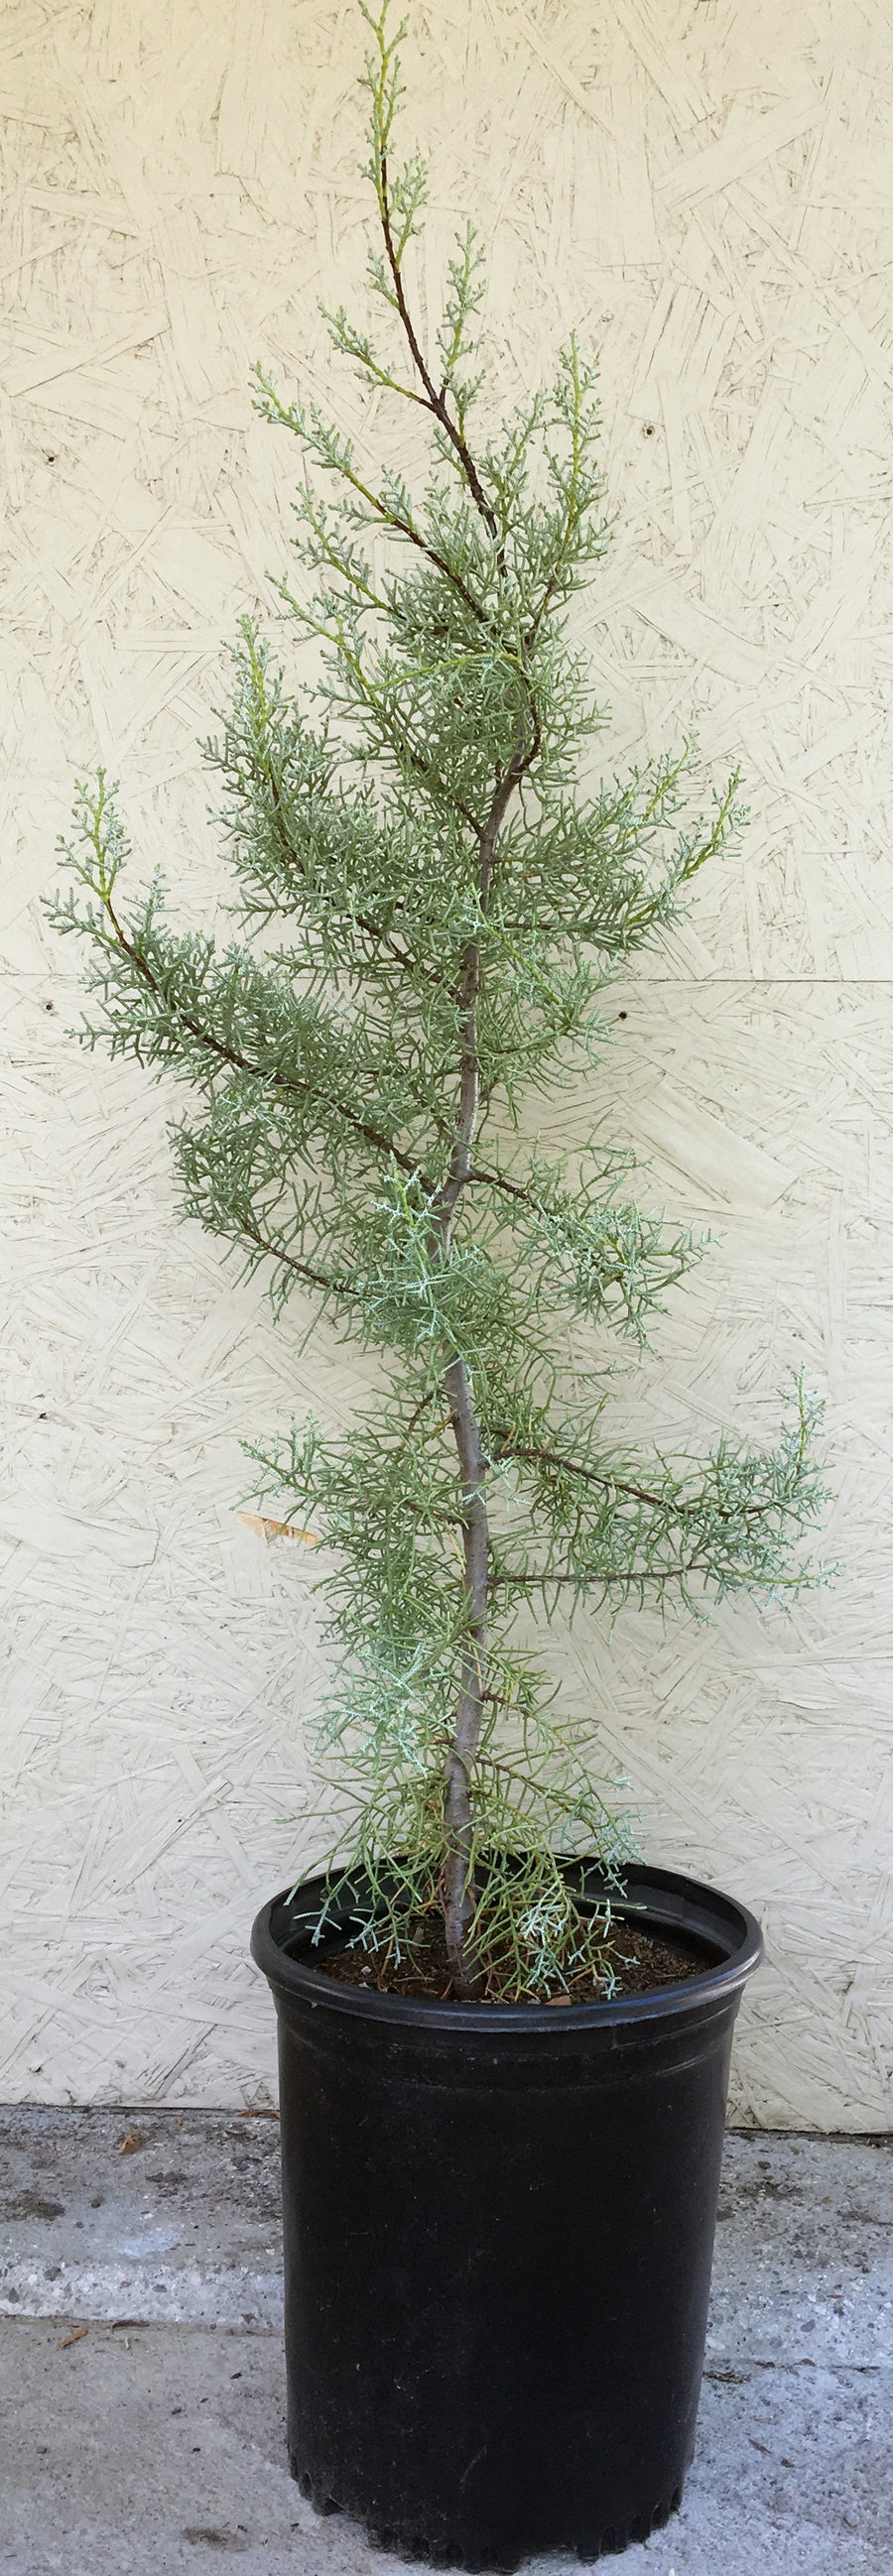 Cupressus montana (san pedro martir cypress)